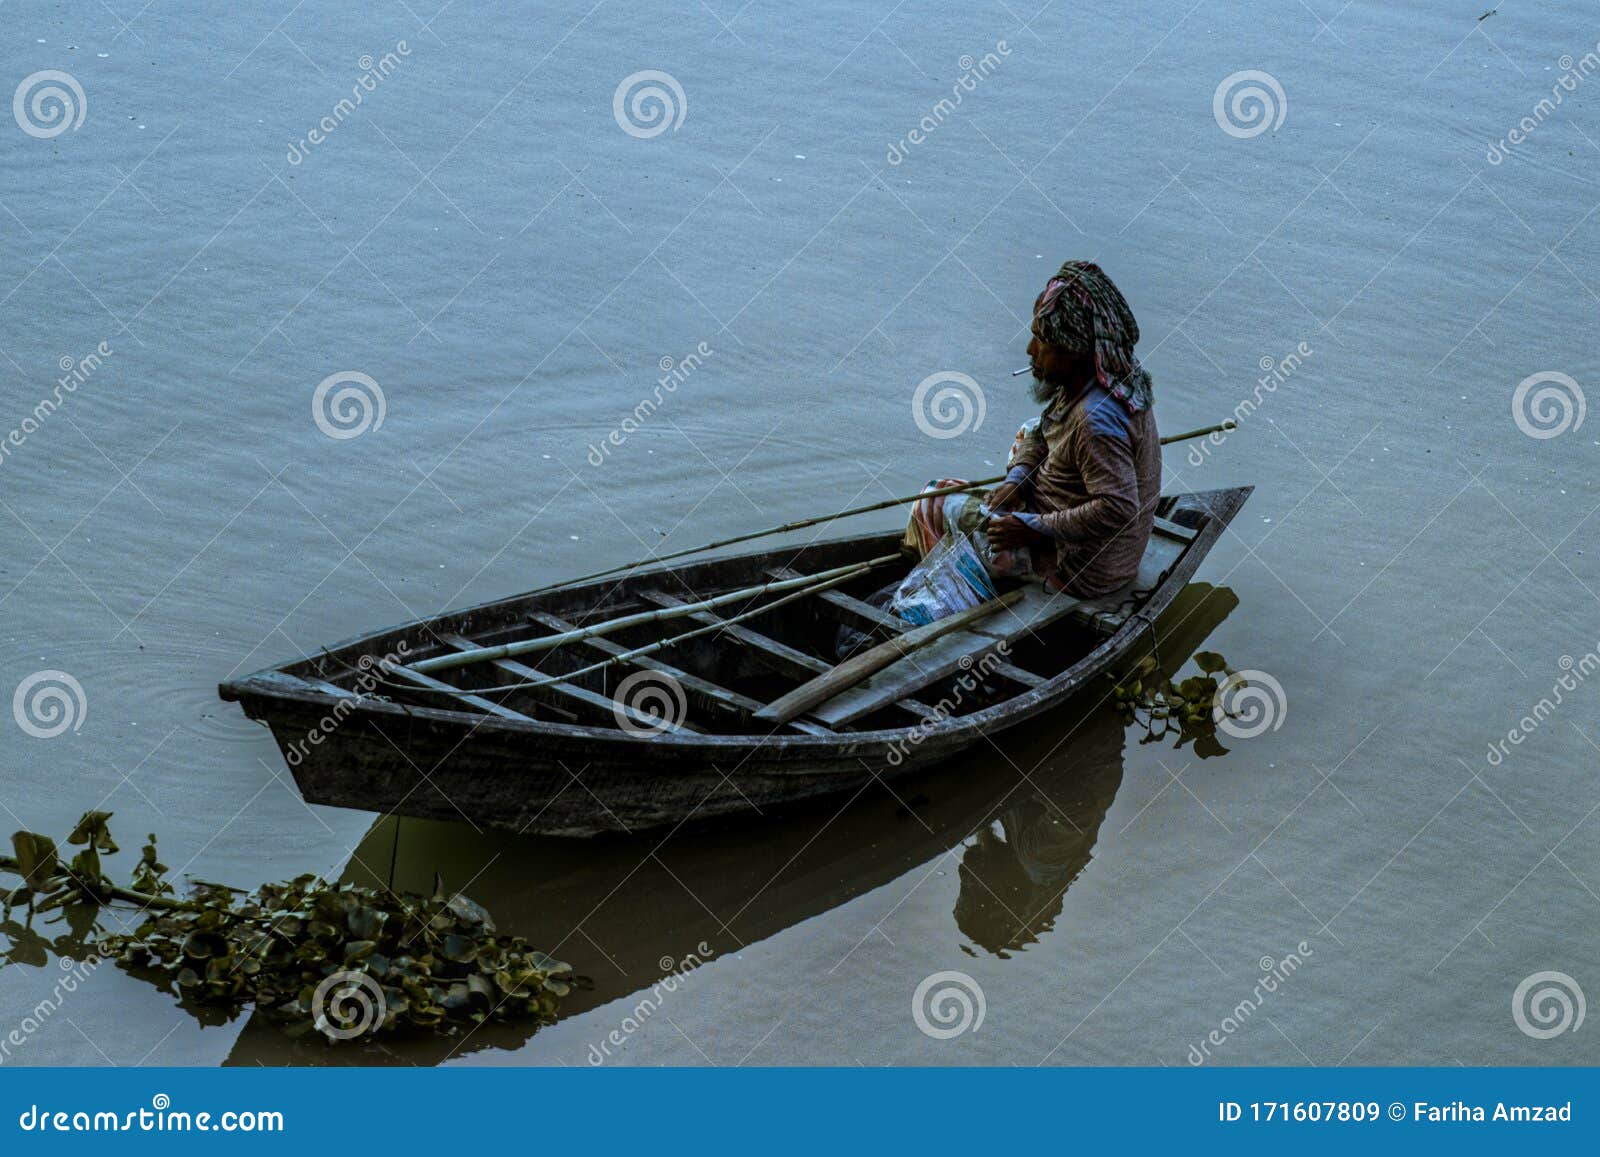 https://thumbs.dreamstime.com/z/water-fishing-boat-oldman-river-pond-fishing-boat-oldman-171607809.jpg